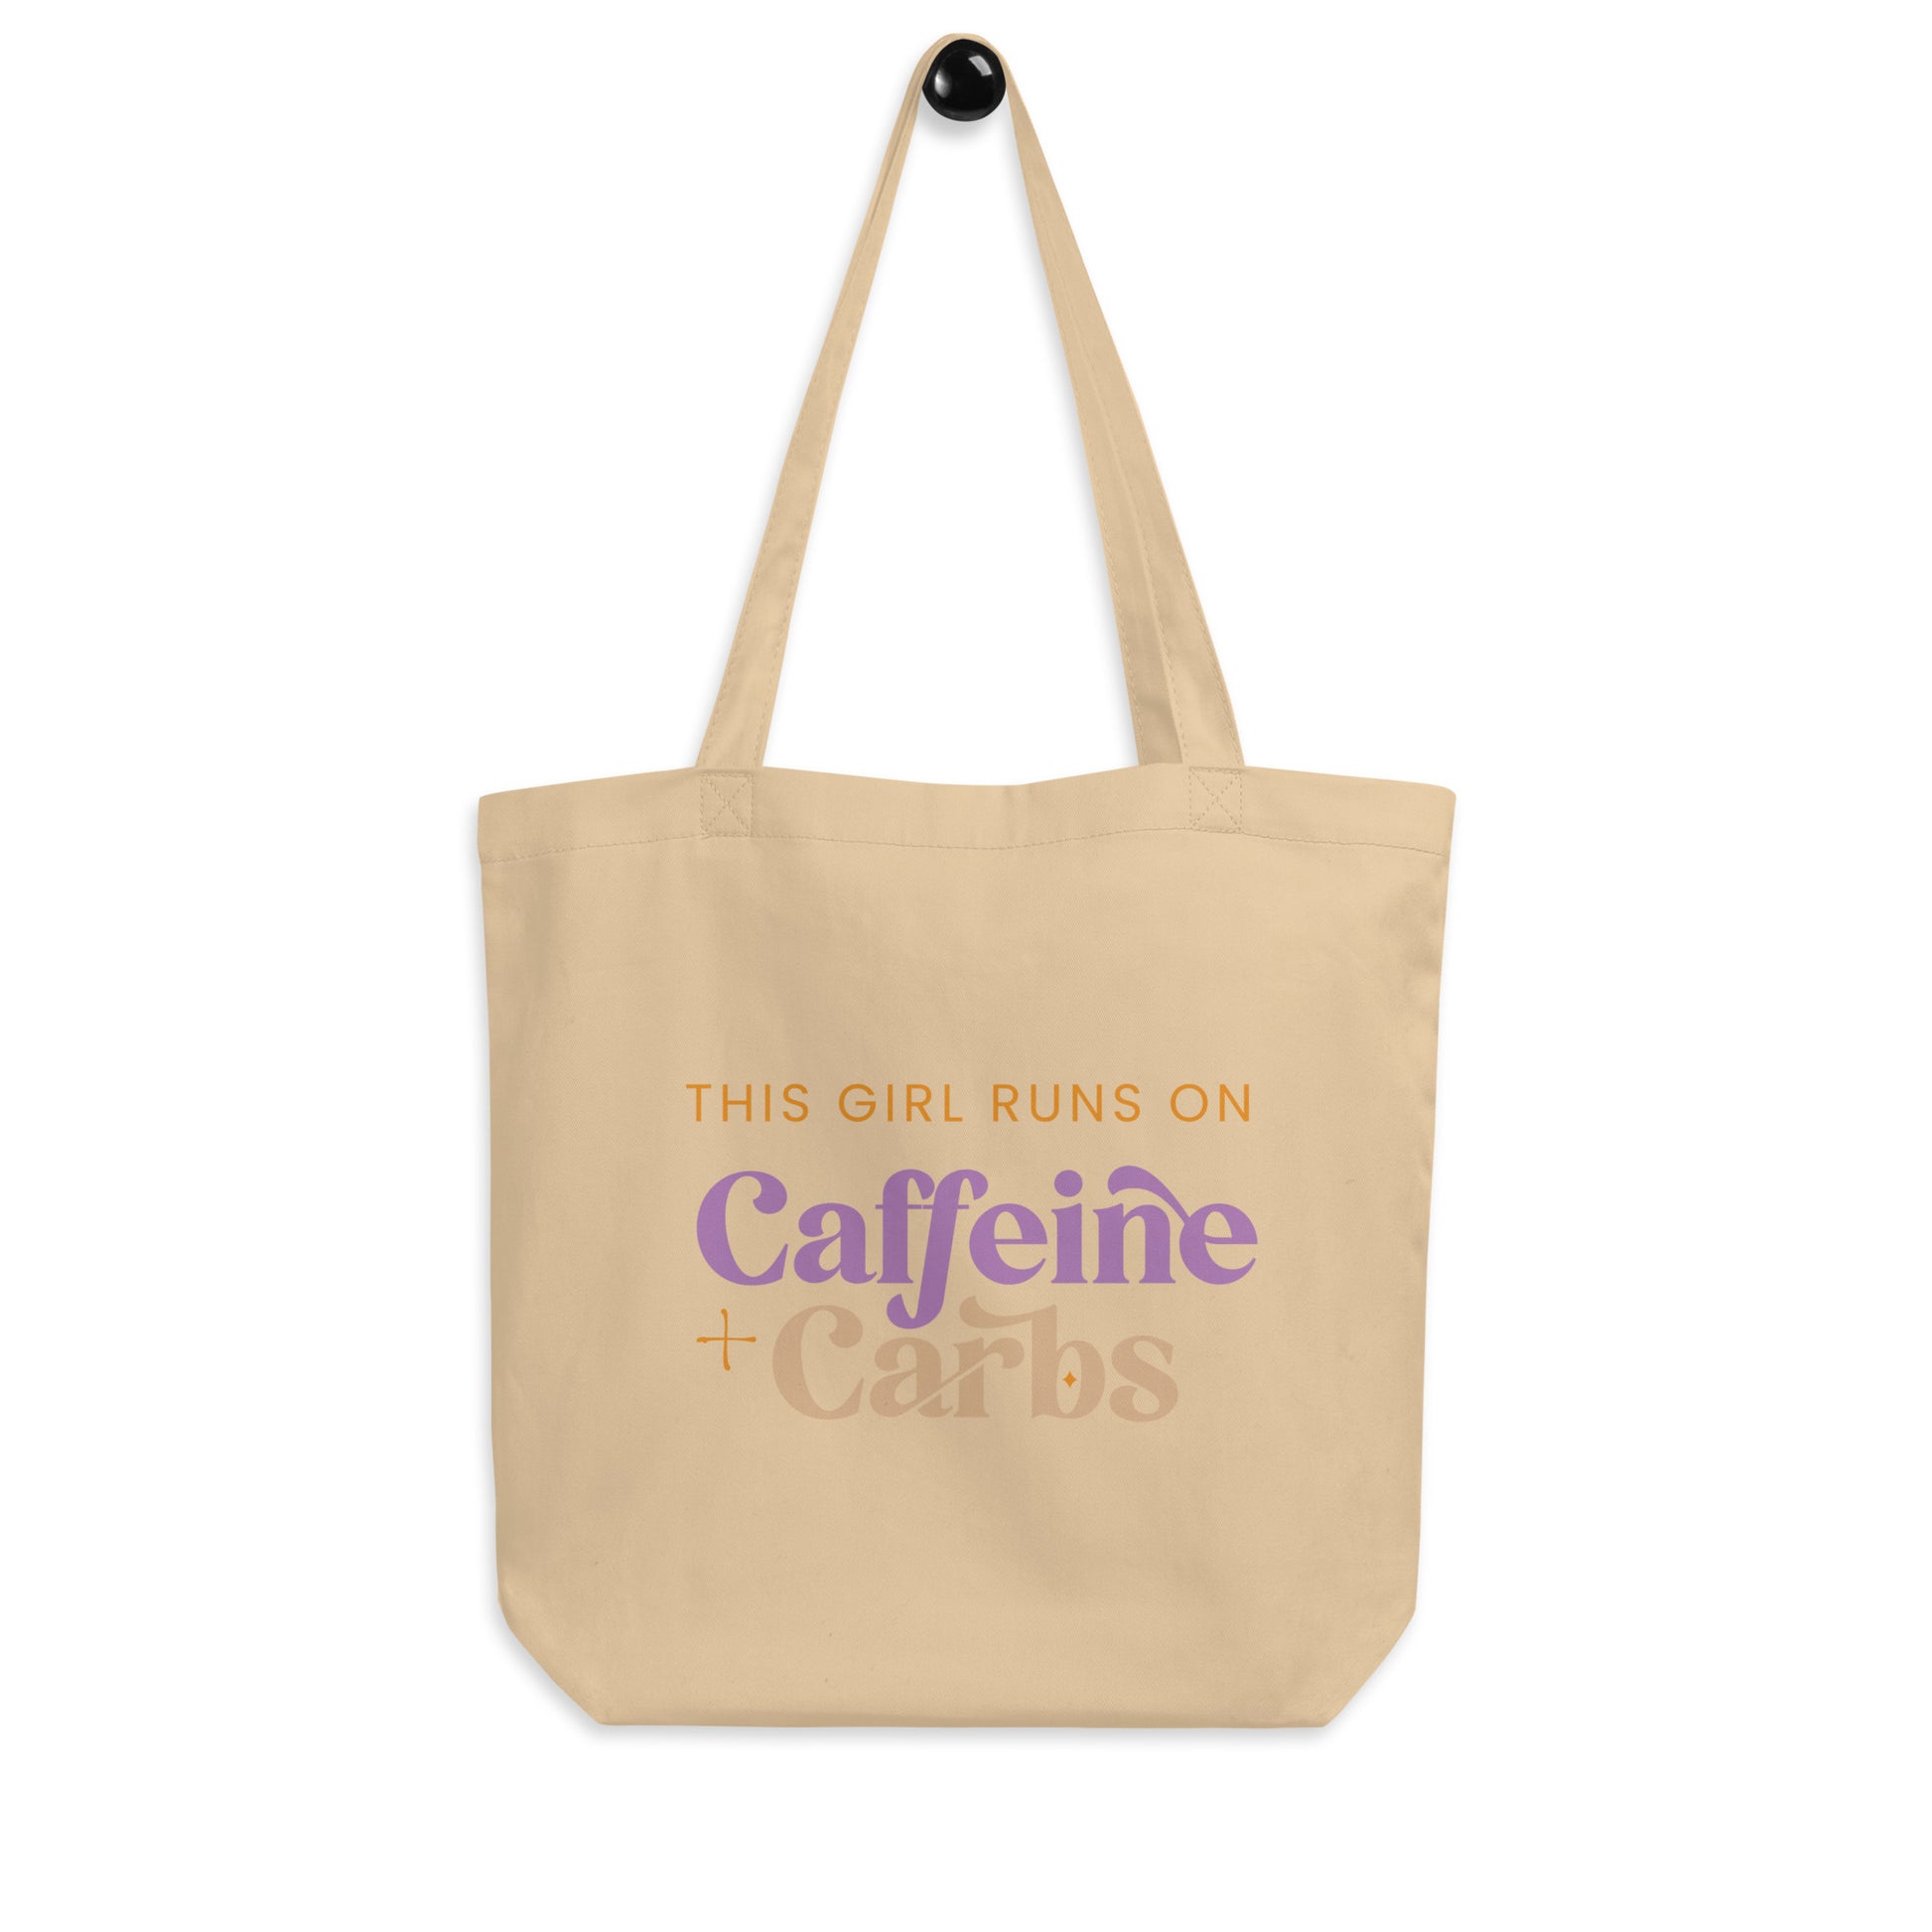 Tan cotton tote bag that says "This girl runs on caffeine + carbs"